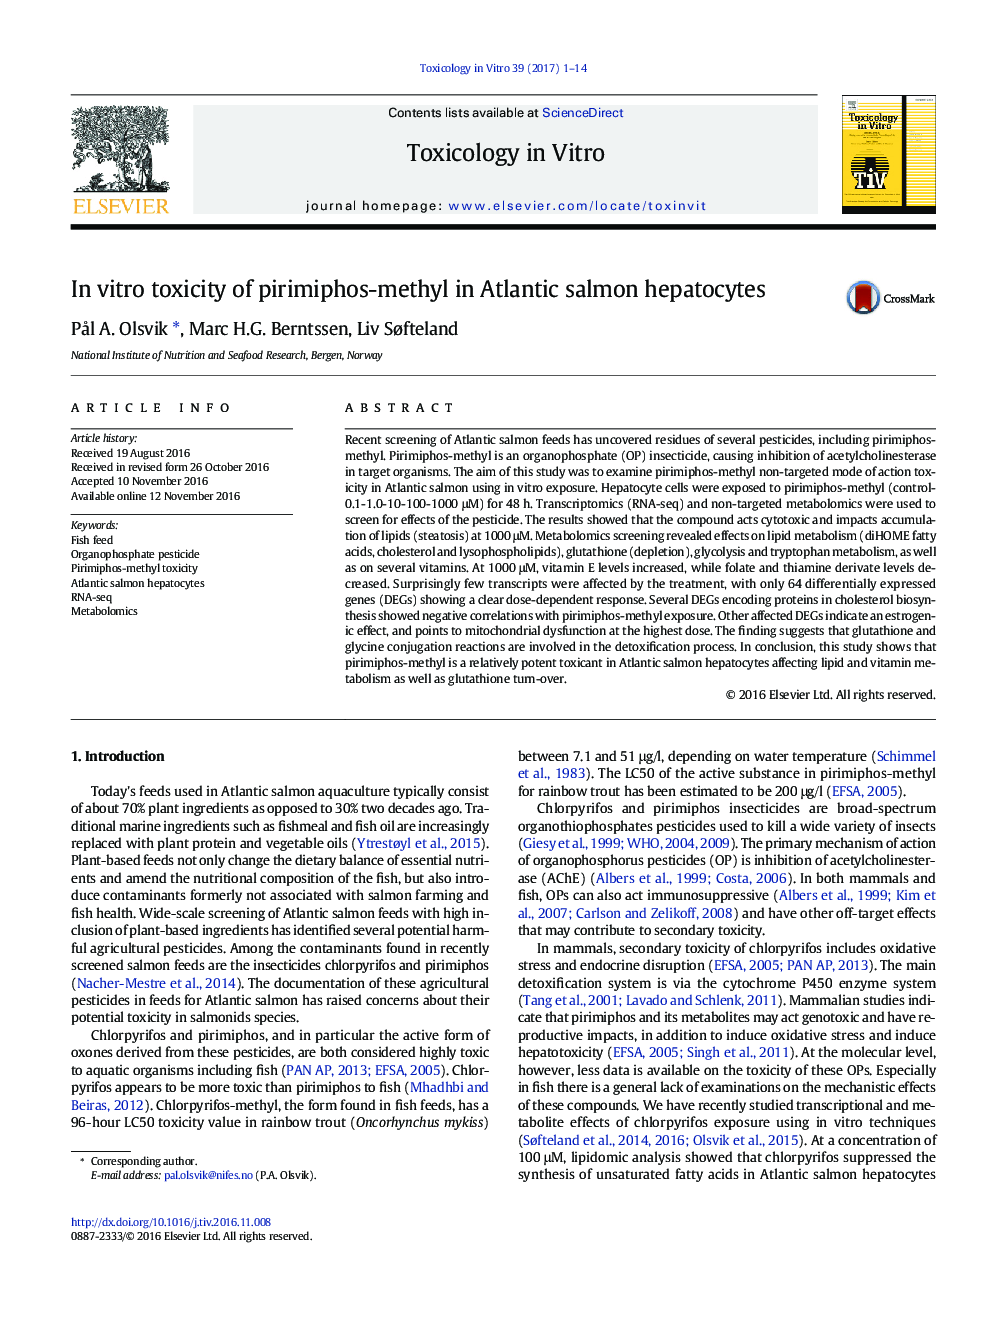 In vitro toxicity of pirimiphos-methyl in Atlantic salmon hepatocytes